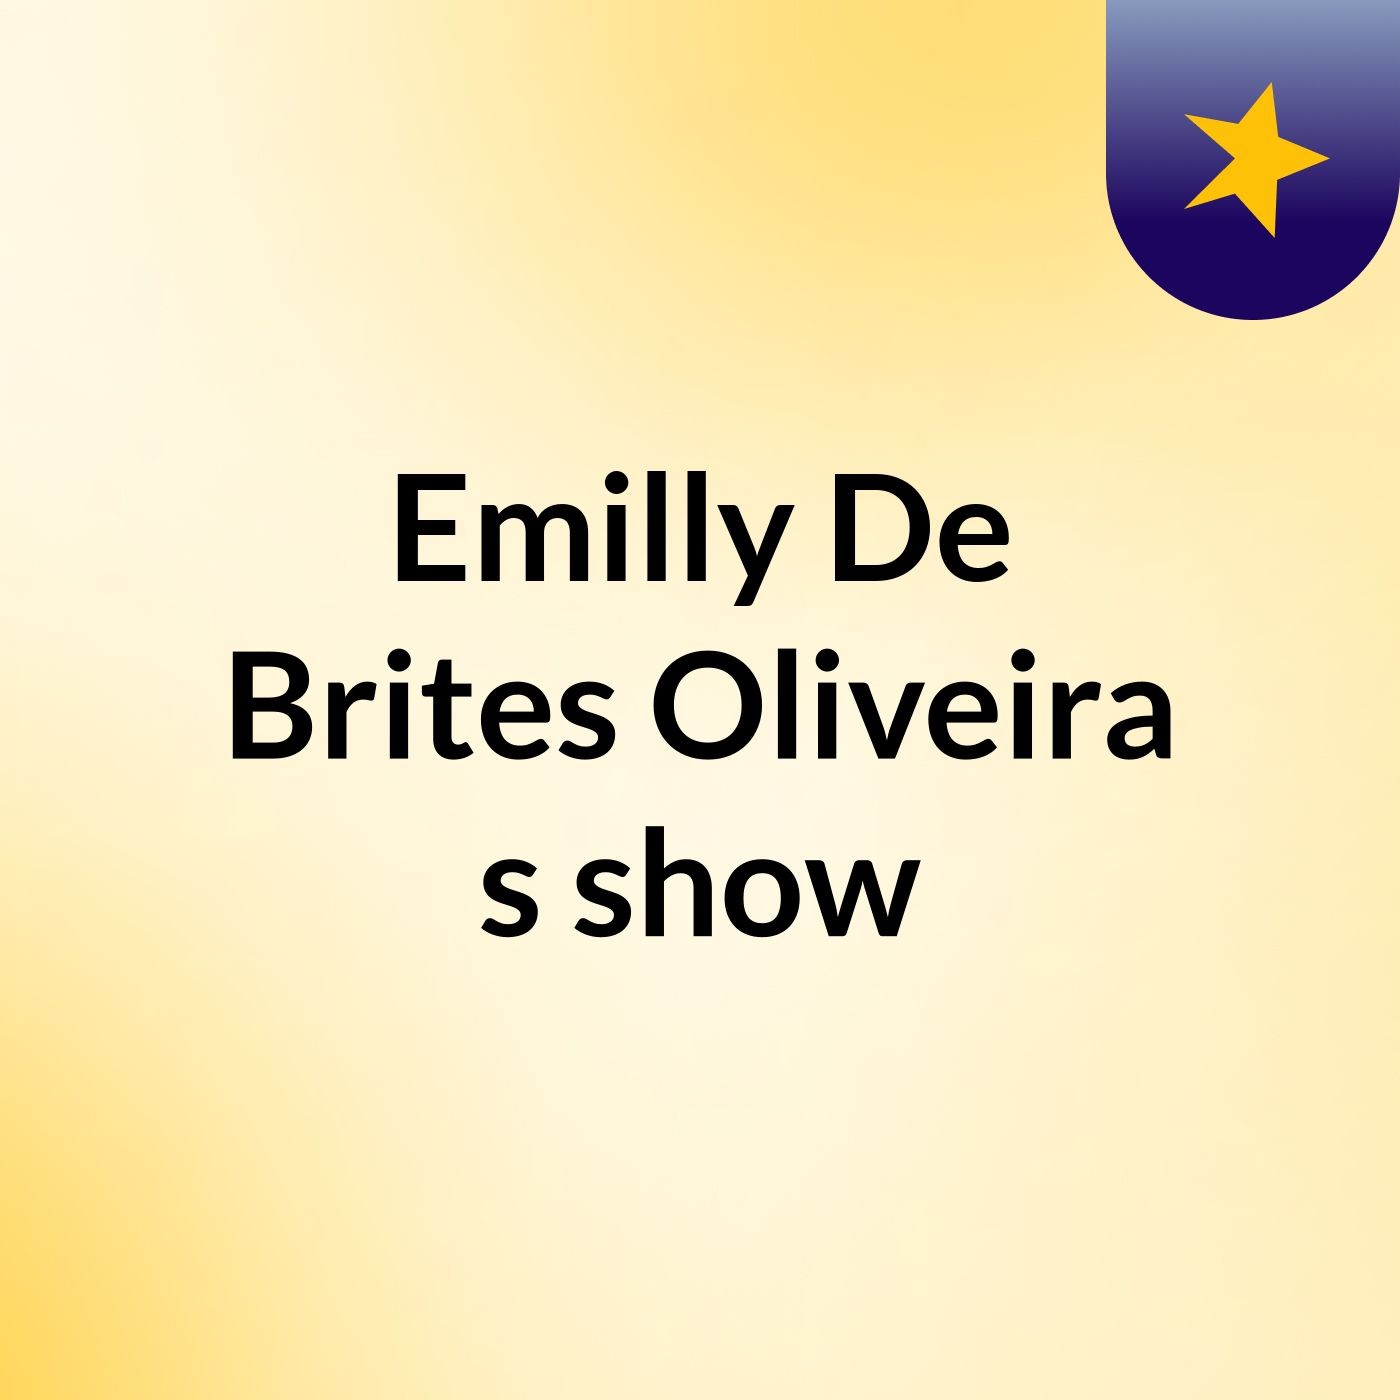 Emilly De Brites Oliveira's show